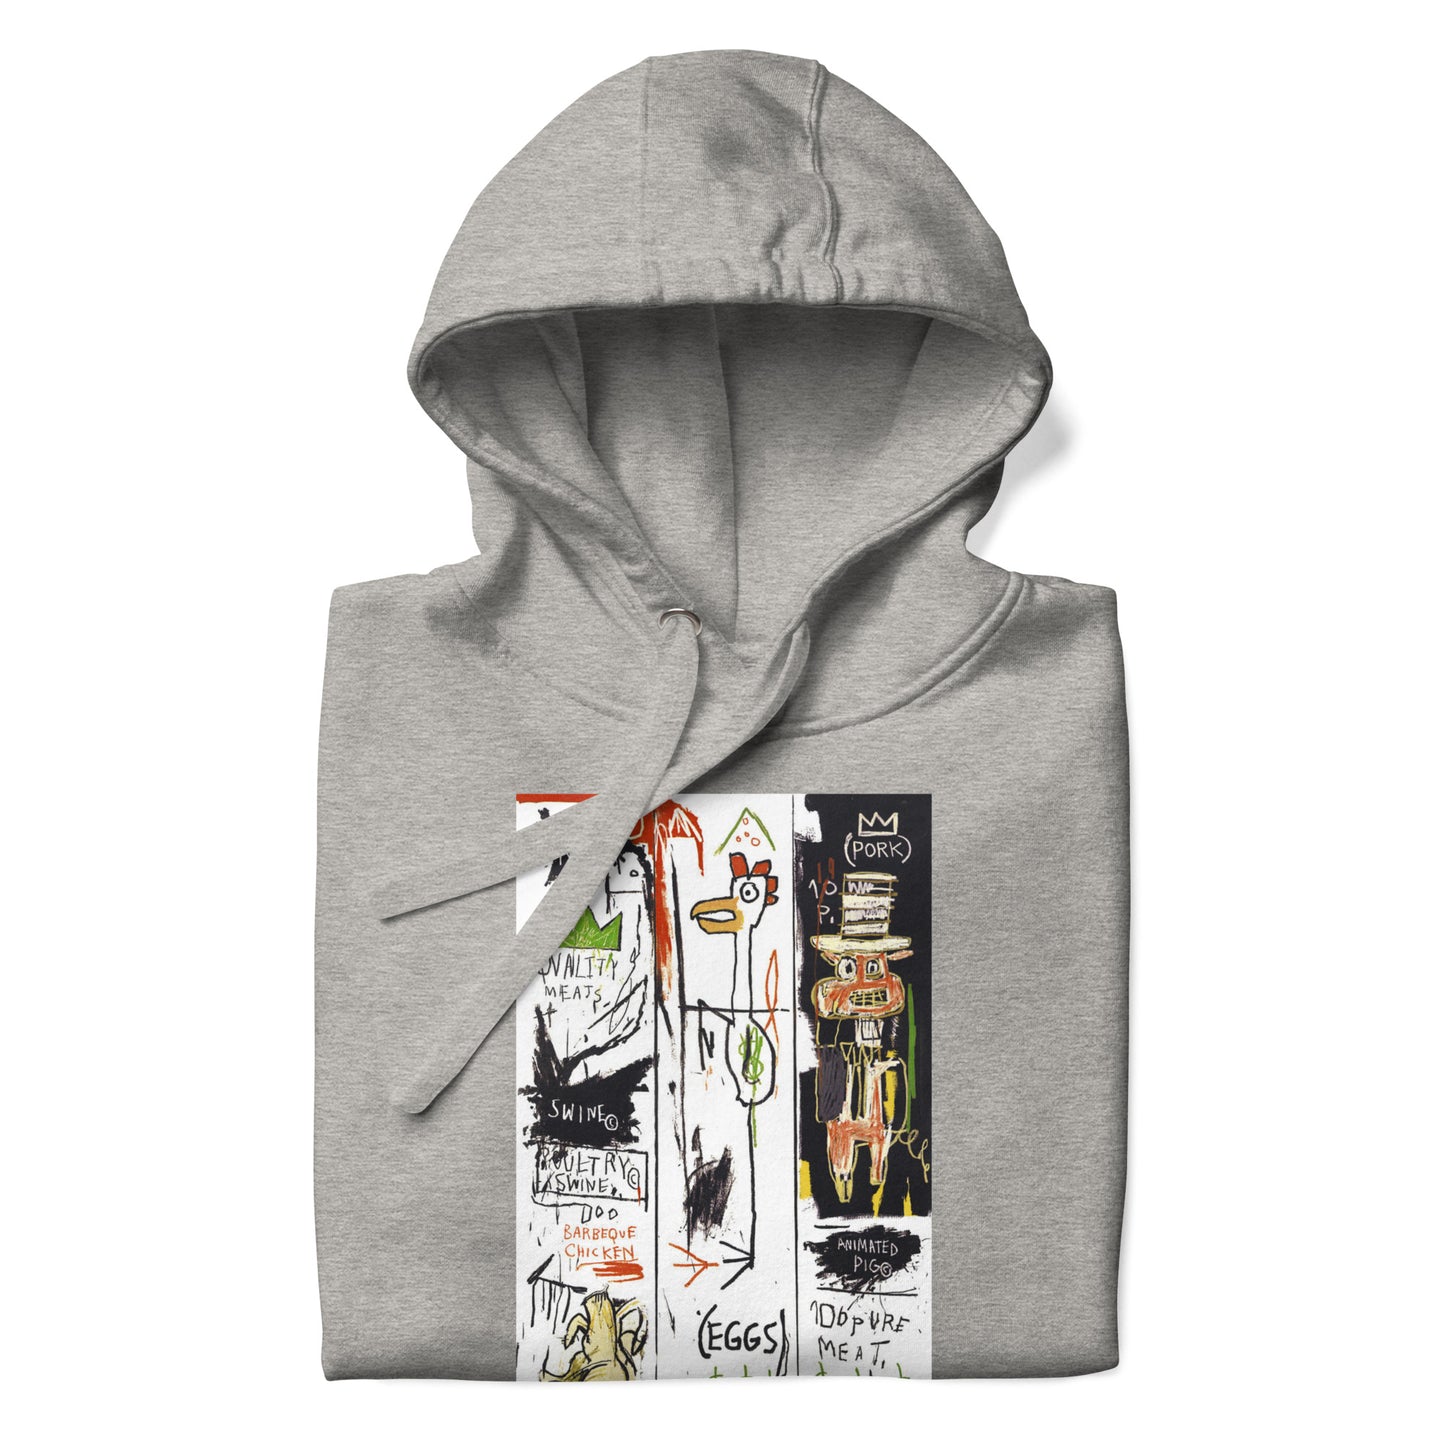 Jean-Michel Basquiat "Quality Meats for the Public" 1982 Artwork Printed Premium Streetwear Sweatshirt Hoodie Grey